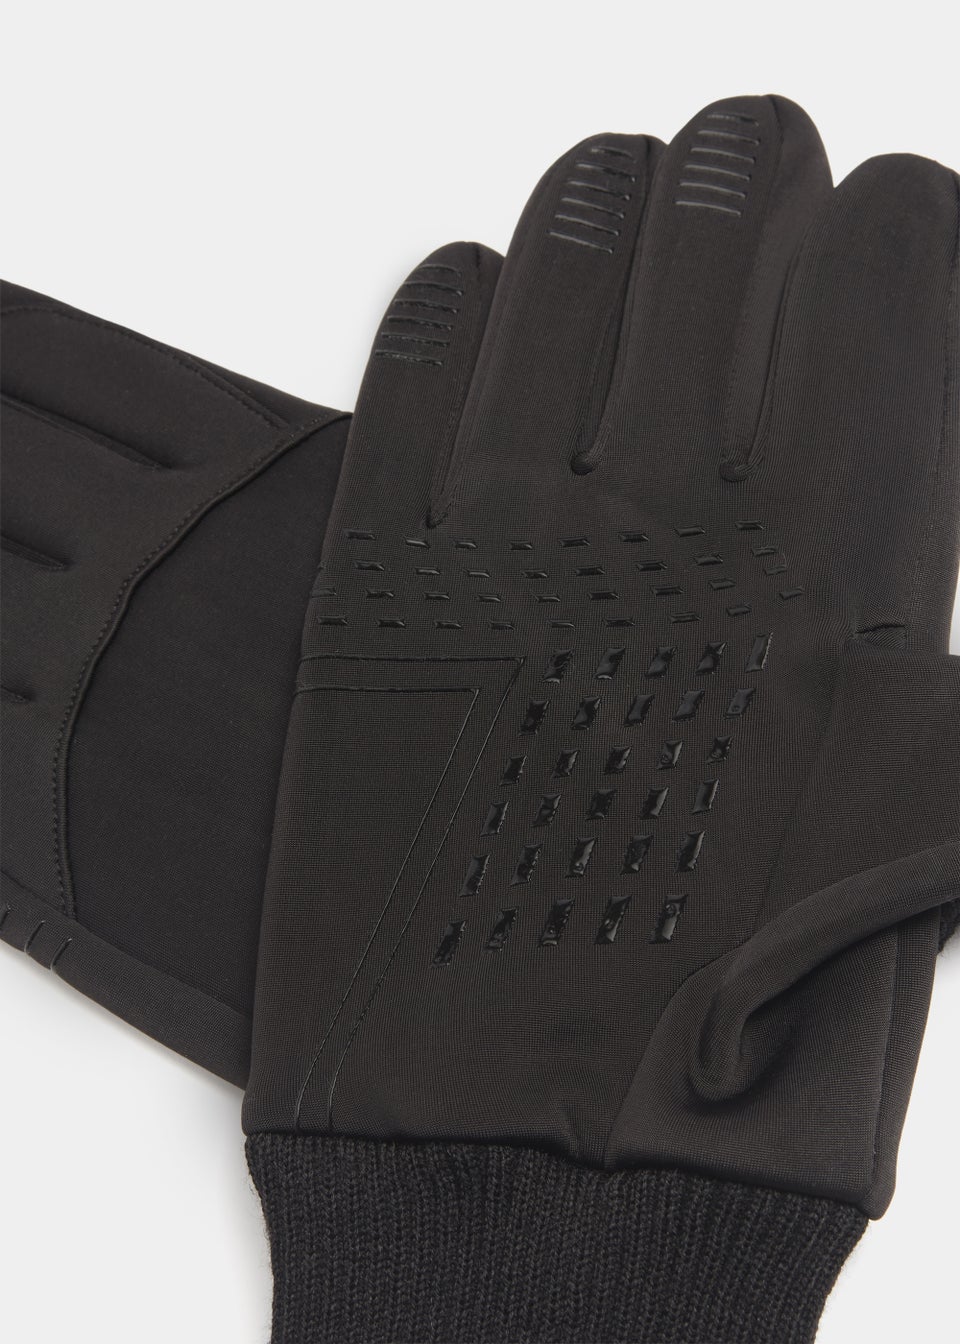 Black Sports Gloves